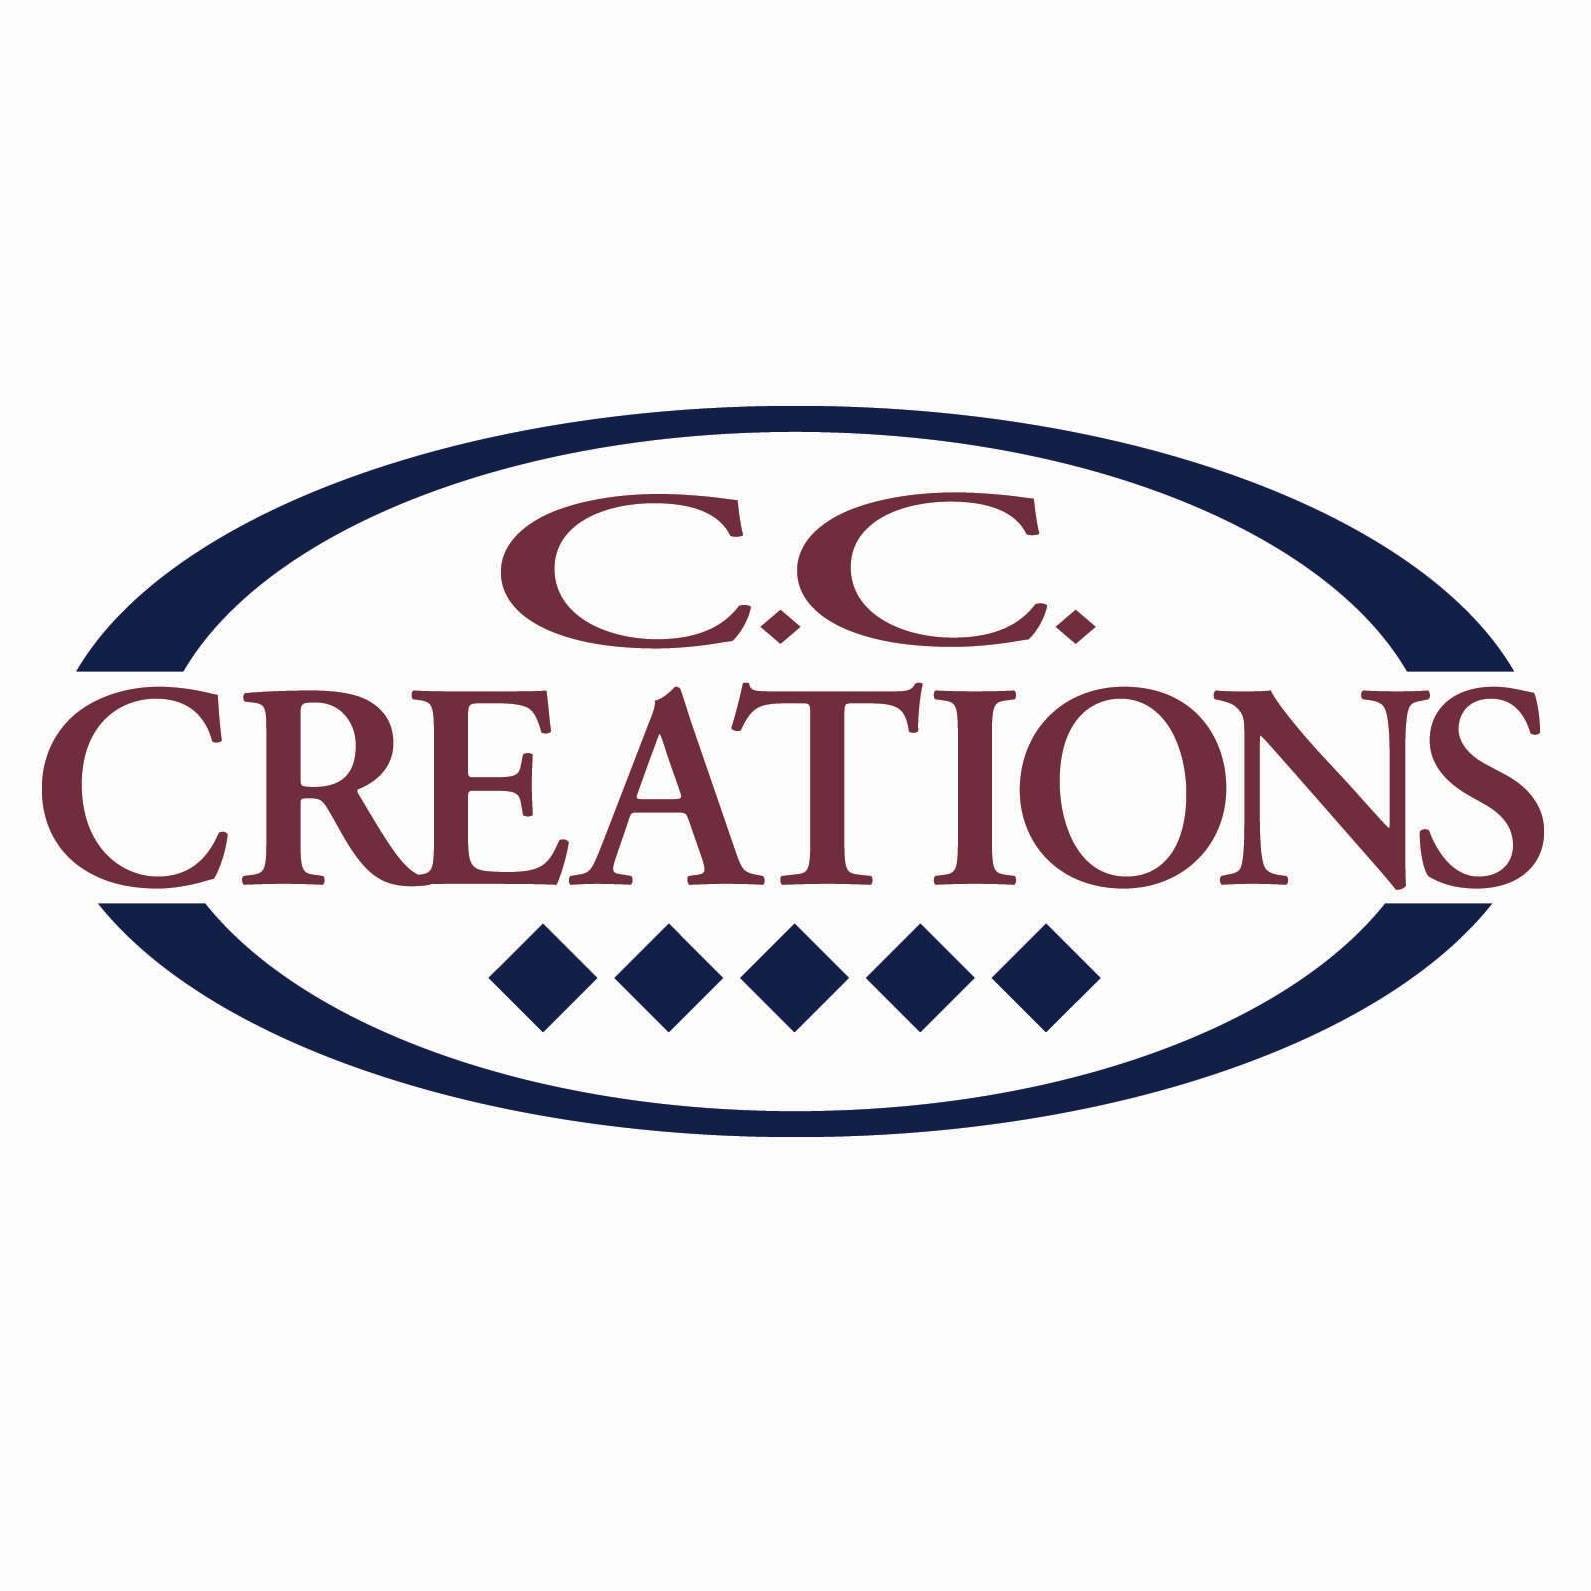 C.C. Creations